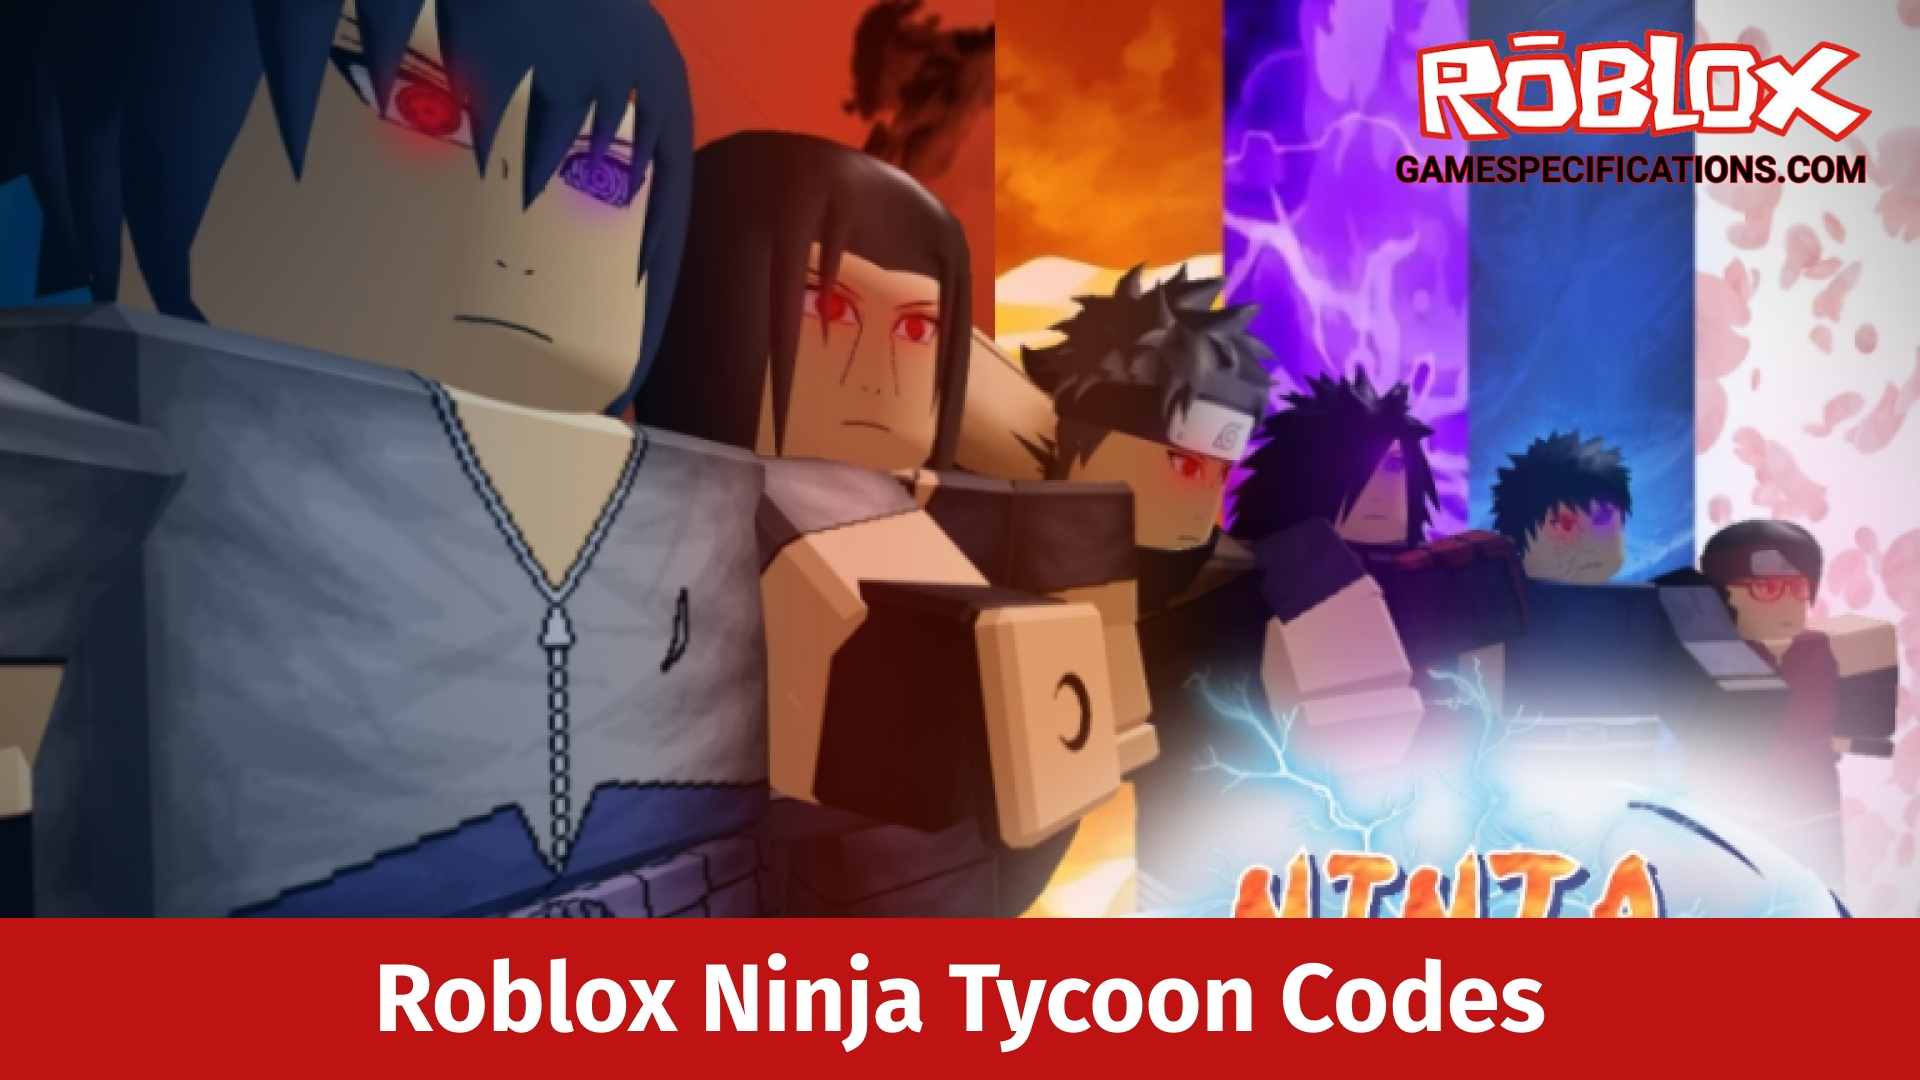 Roblox Ninja Tycoon Codes July 2021 Game Specifications - roblox ninja heroes